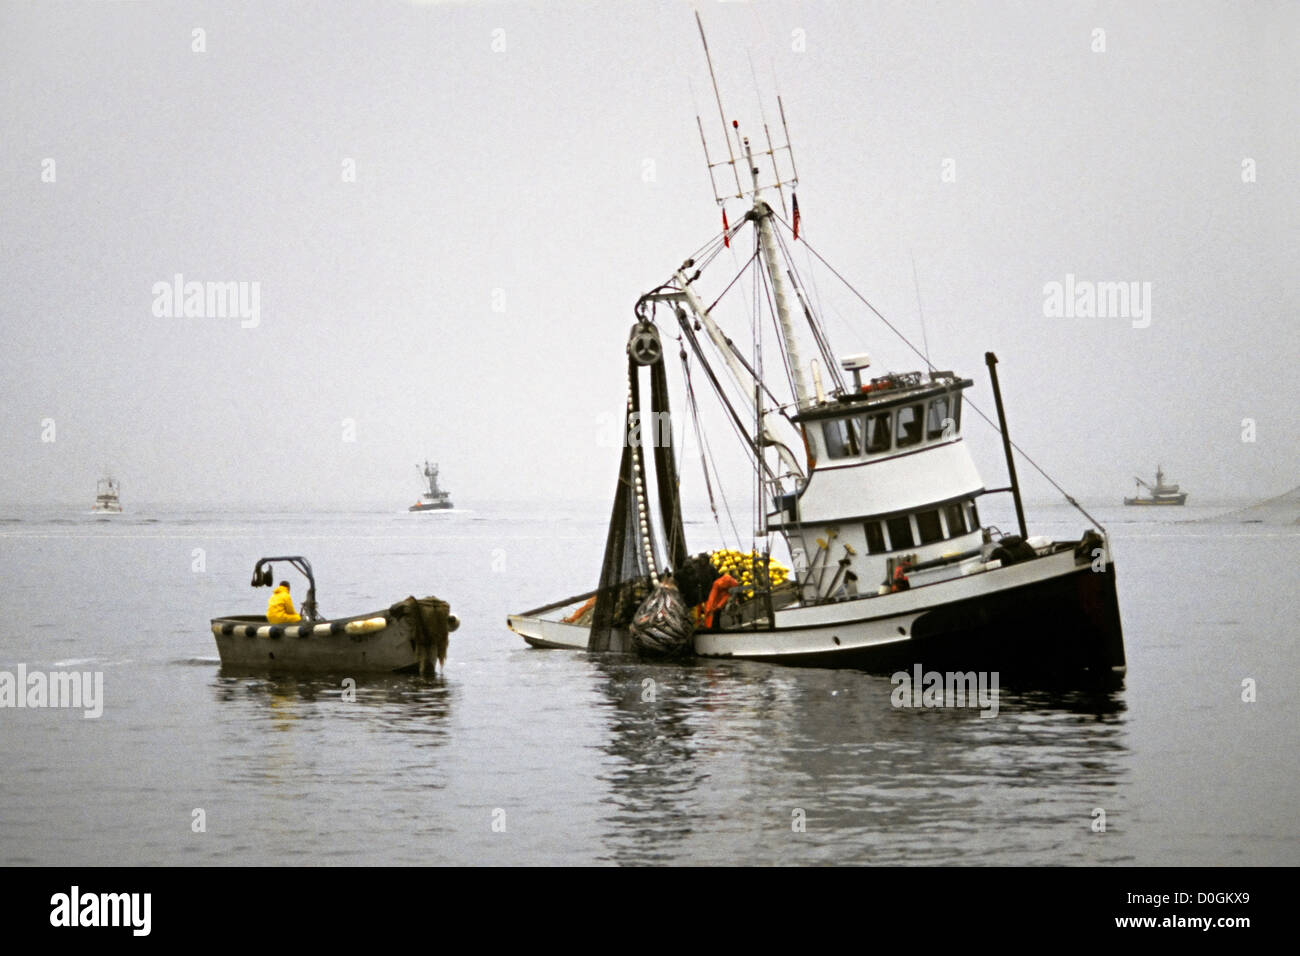 Purse Seiner Vessel with Catch of Chum Salmon Stock Photo